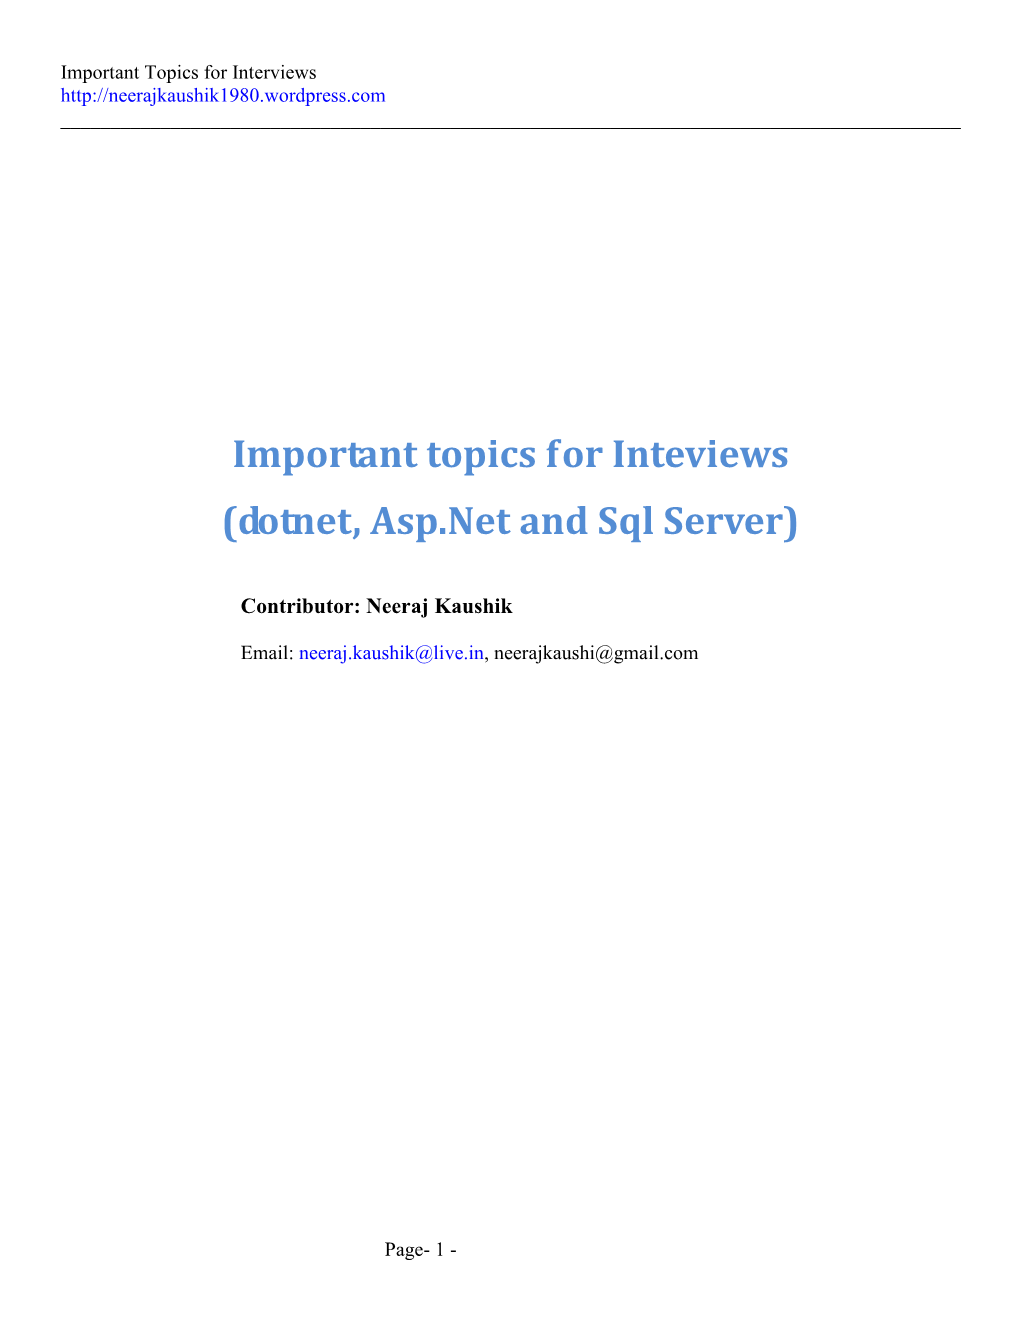 Dotnet, Asp.Net and Sql Server)